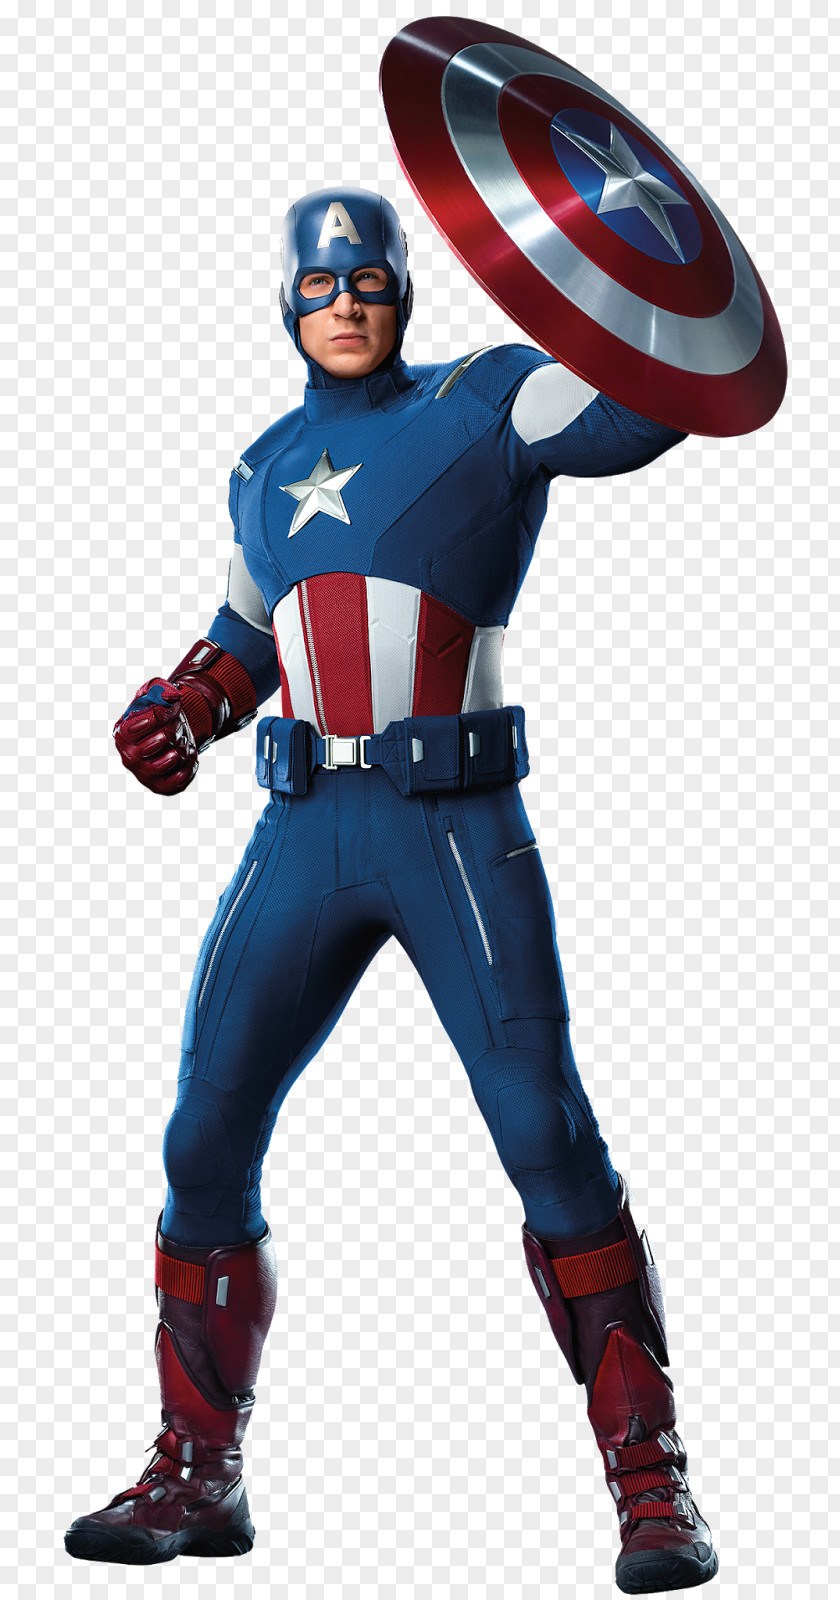 Chris Evans Captain America: The First Avenger Iron Man Clip Art PNG